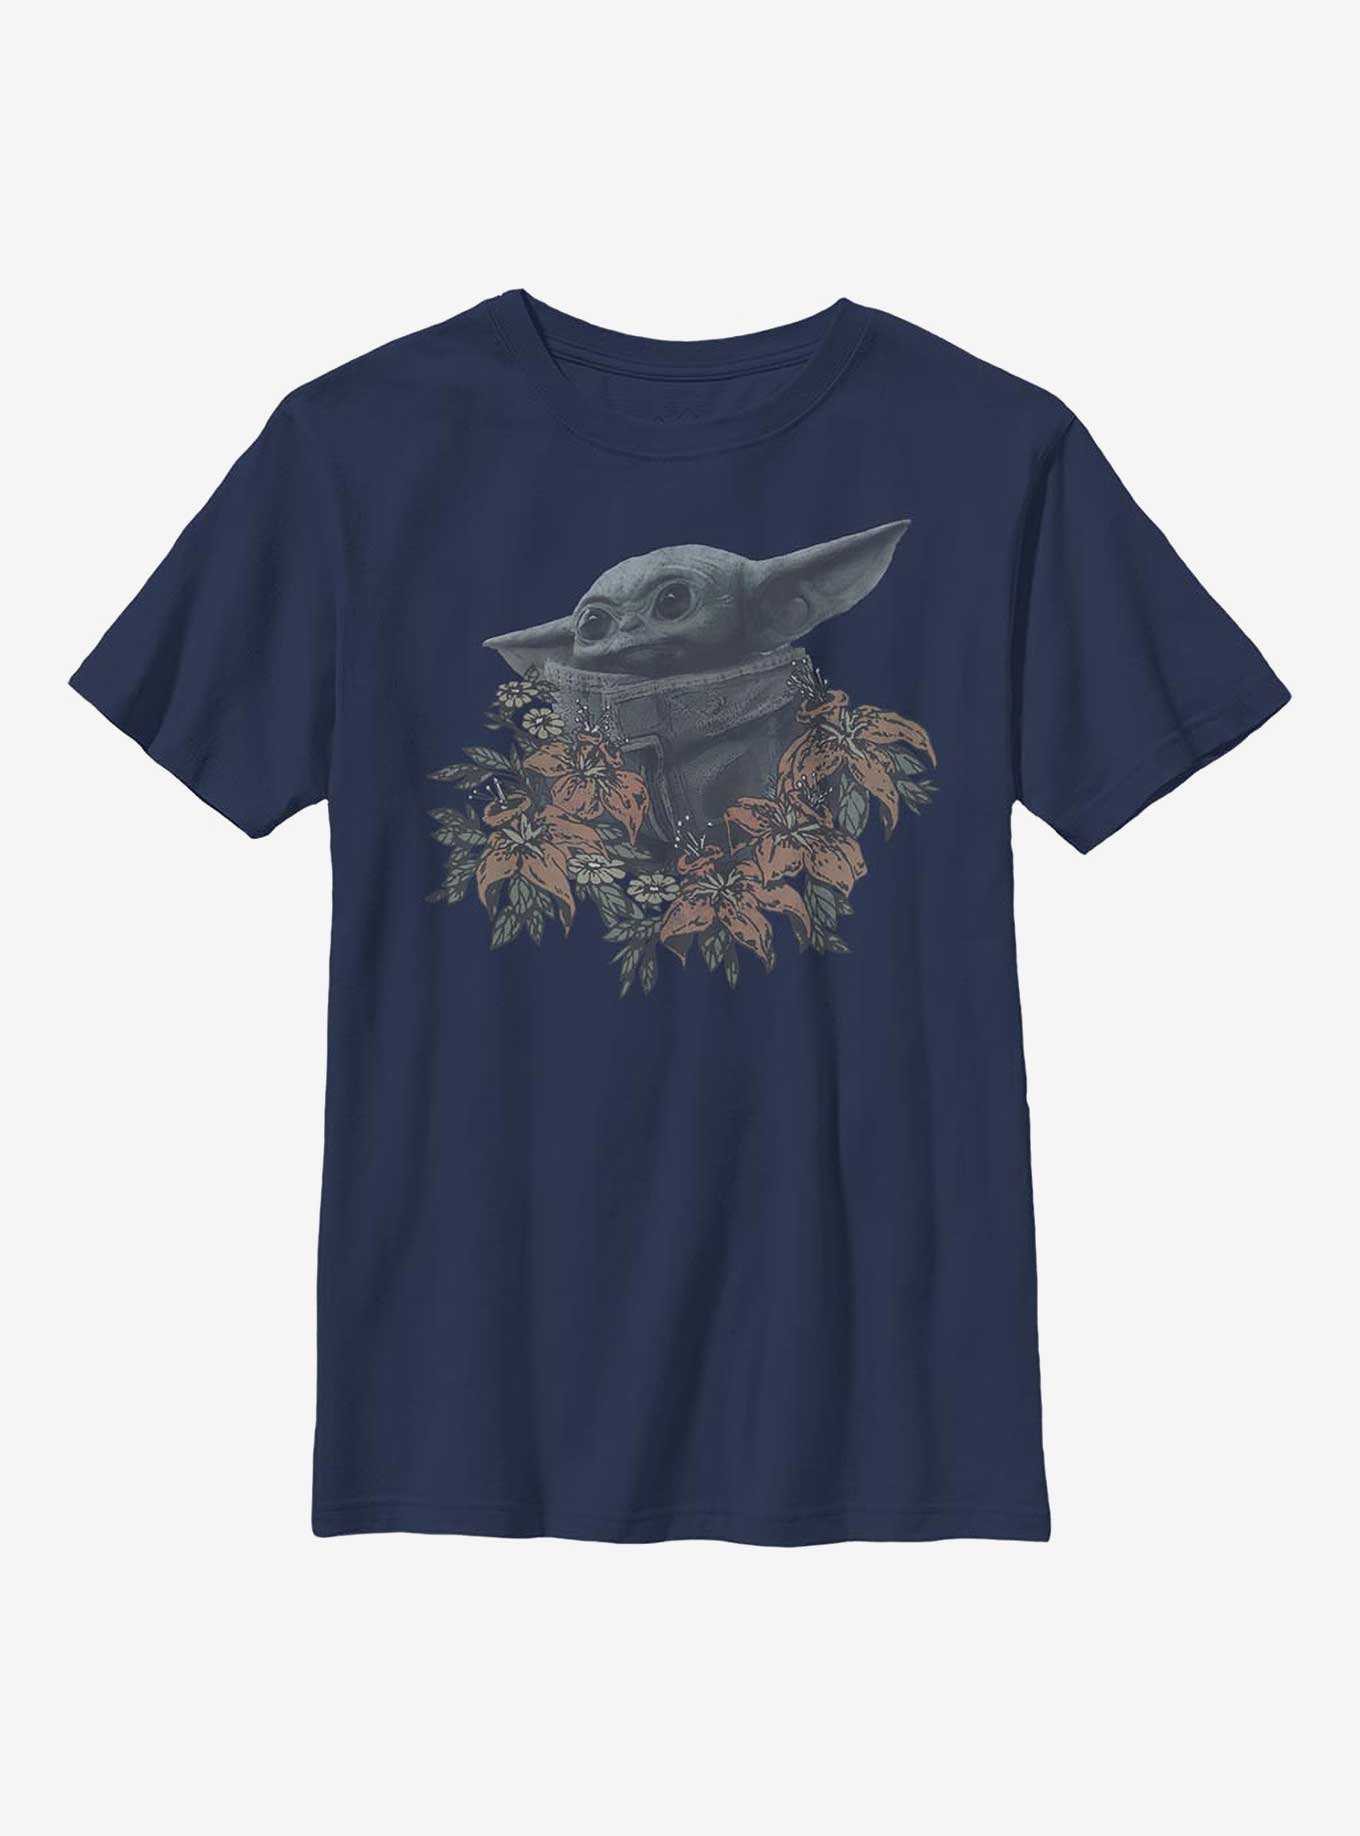 Star Wars The Mandalorian Flower Child Youth T-Shirt, , hi-res